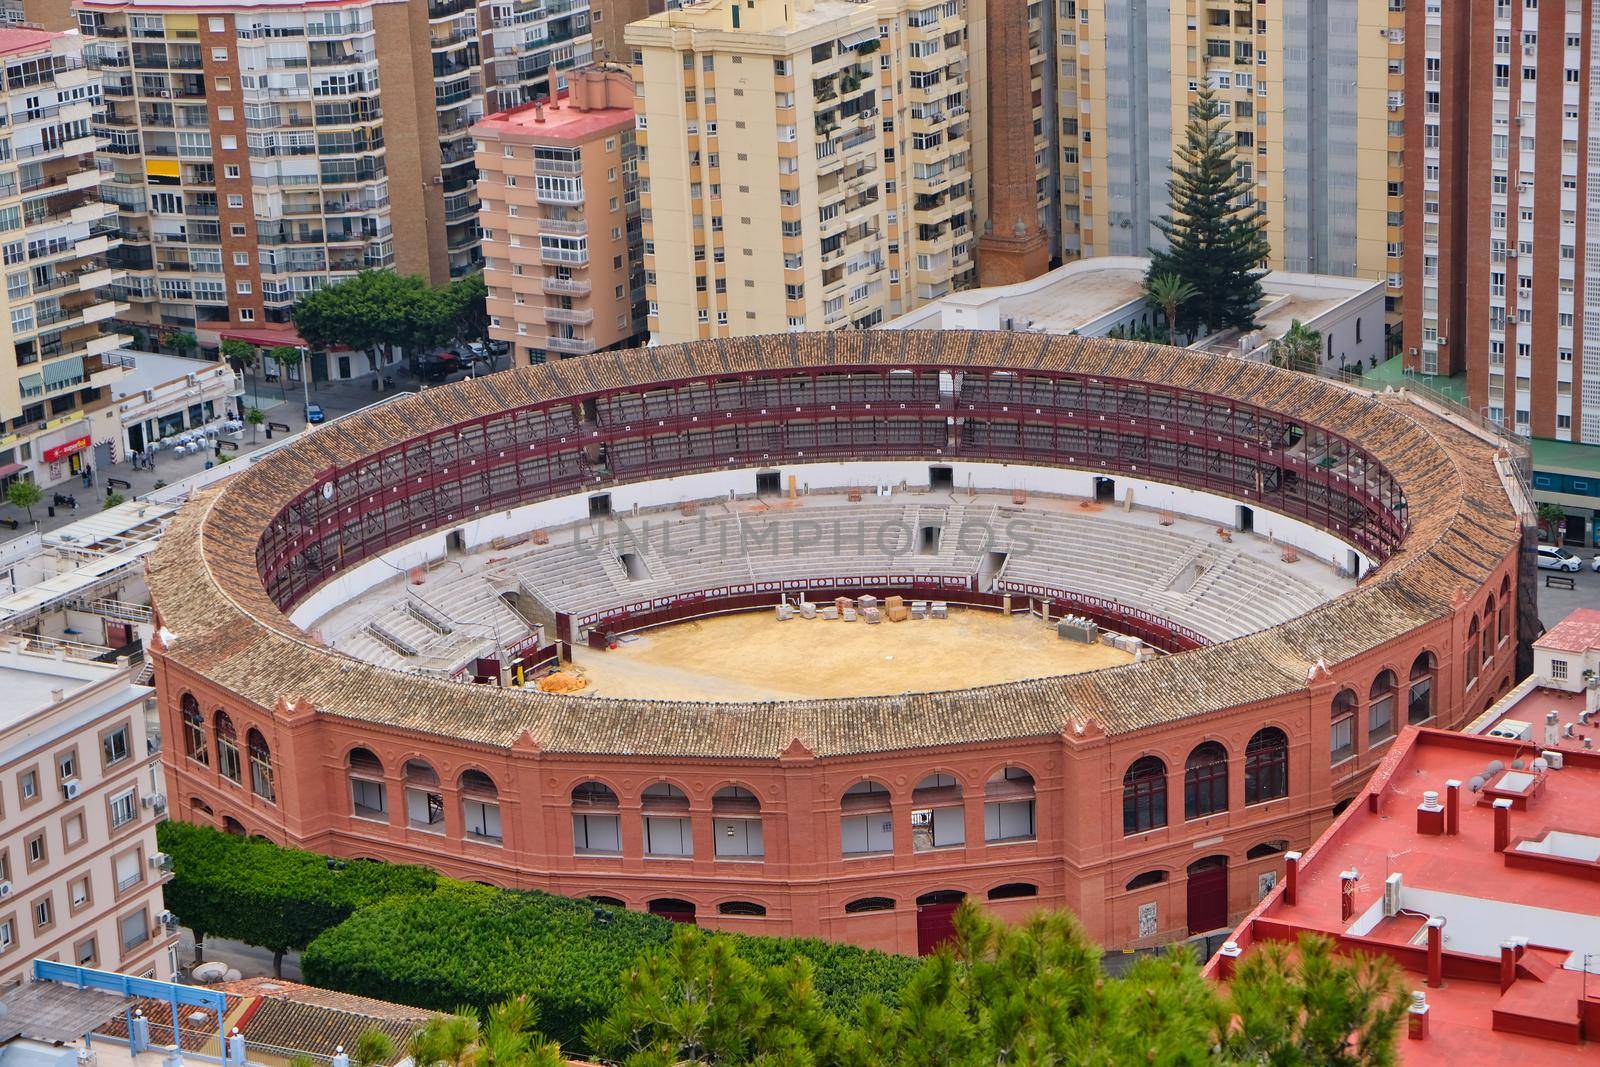 La Malagueta bull ring in Malaga (Spain)